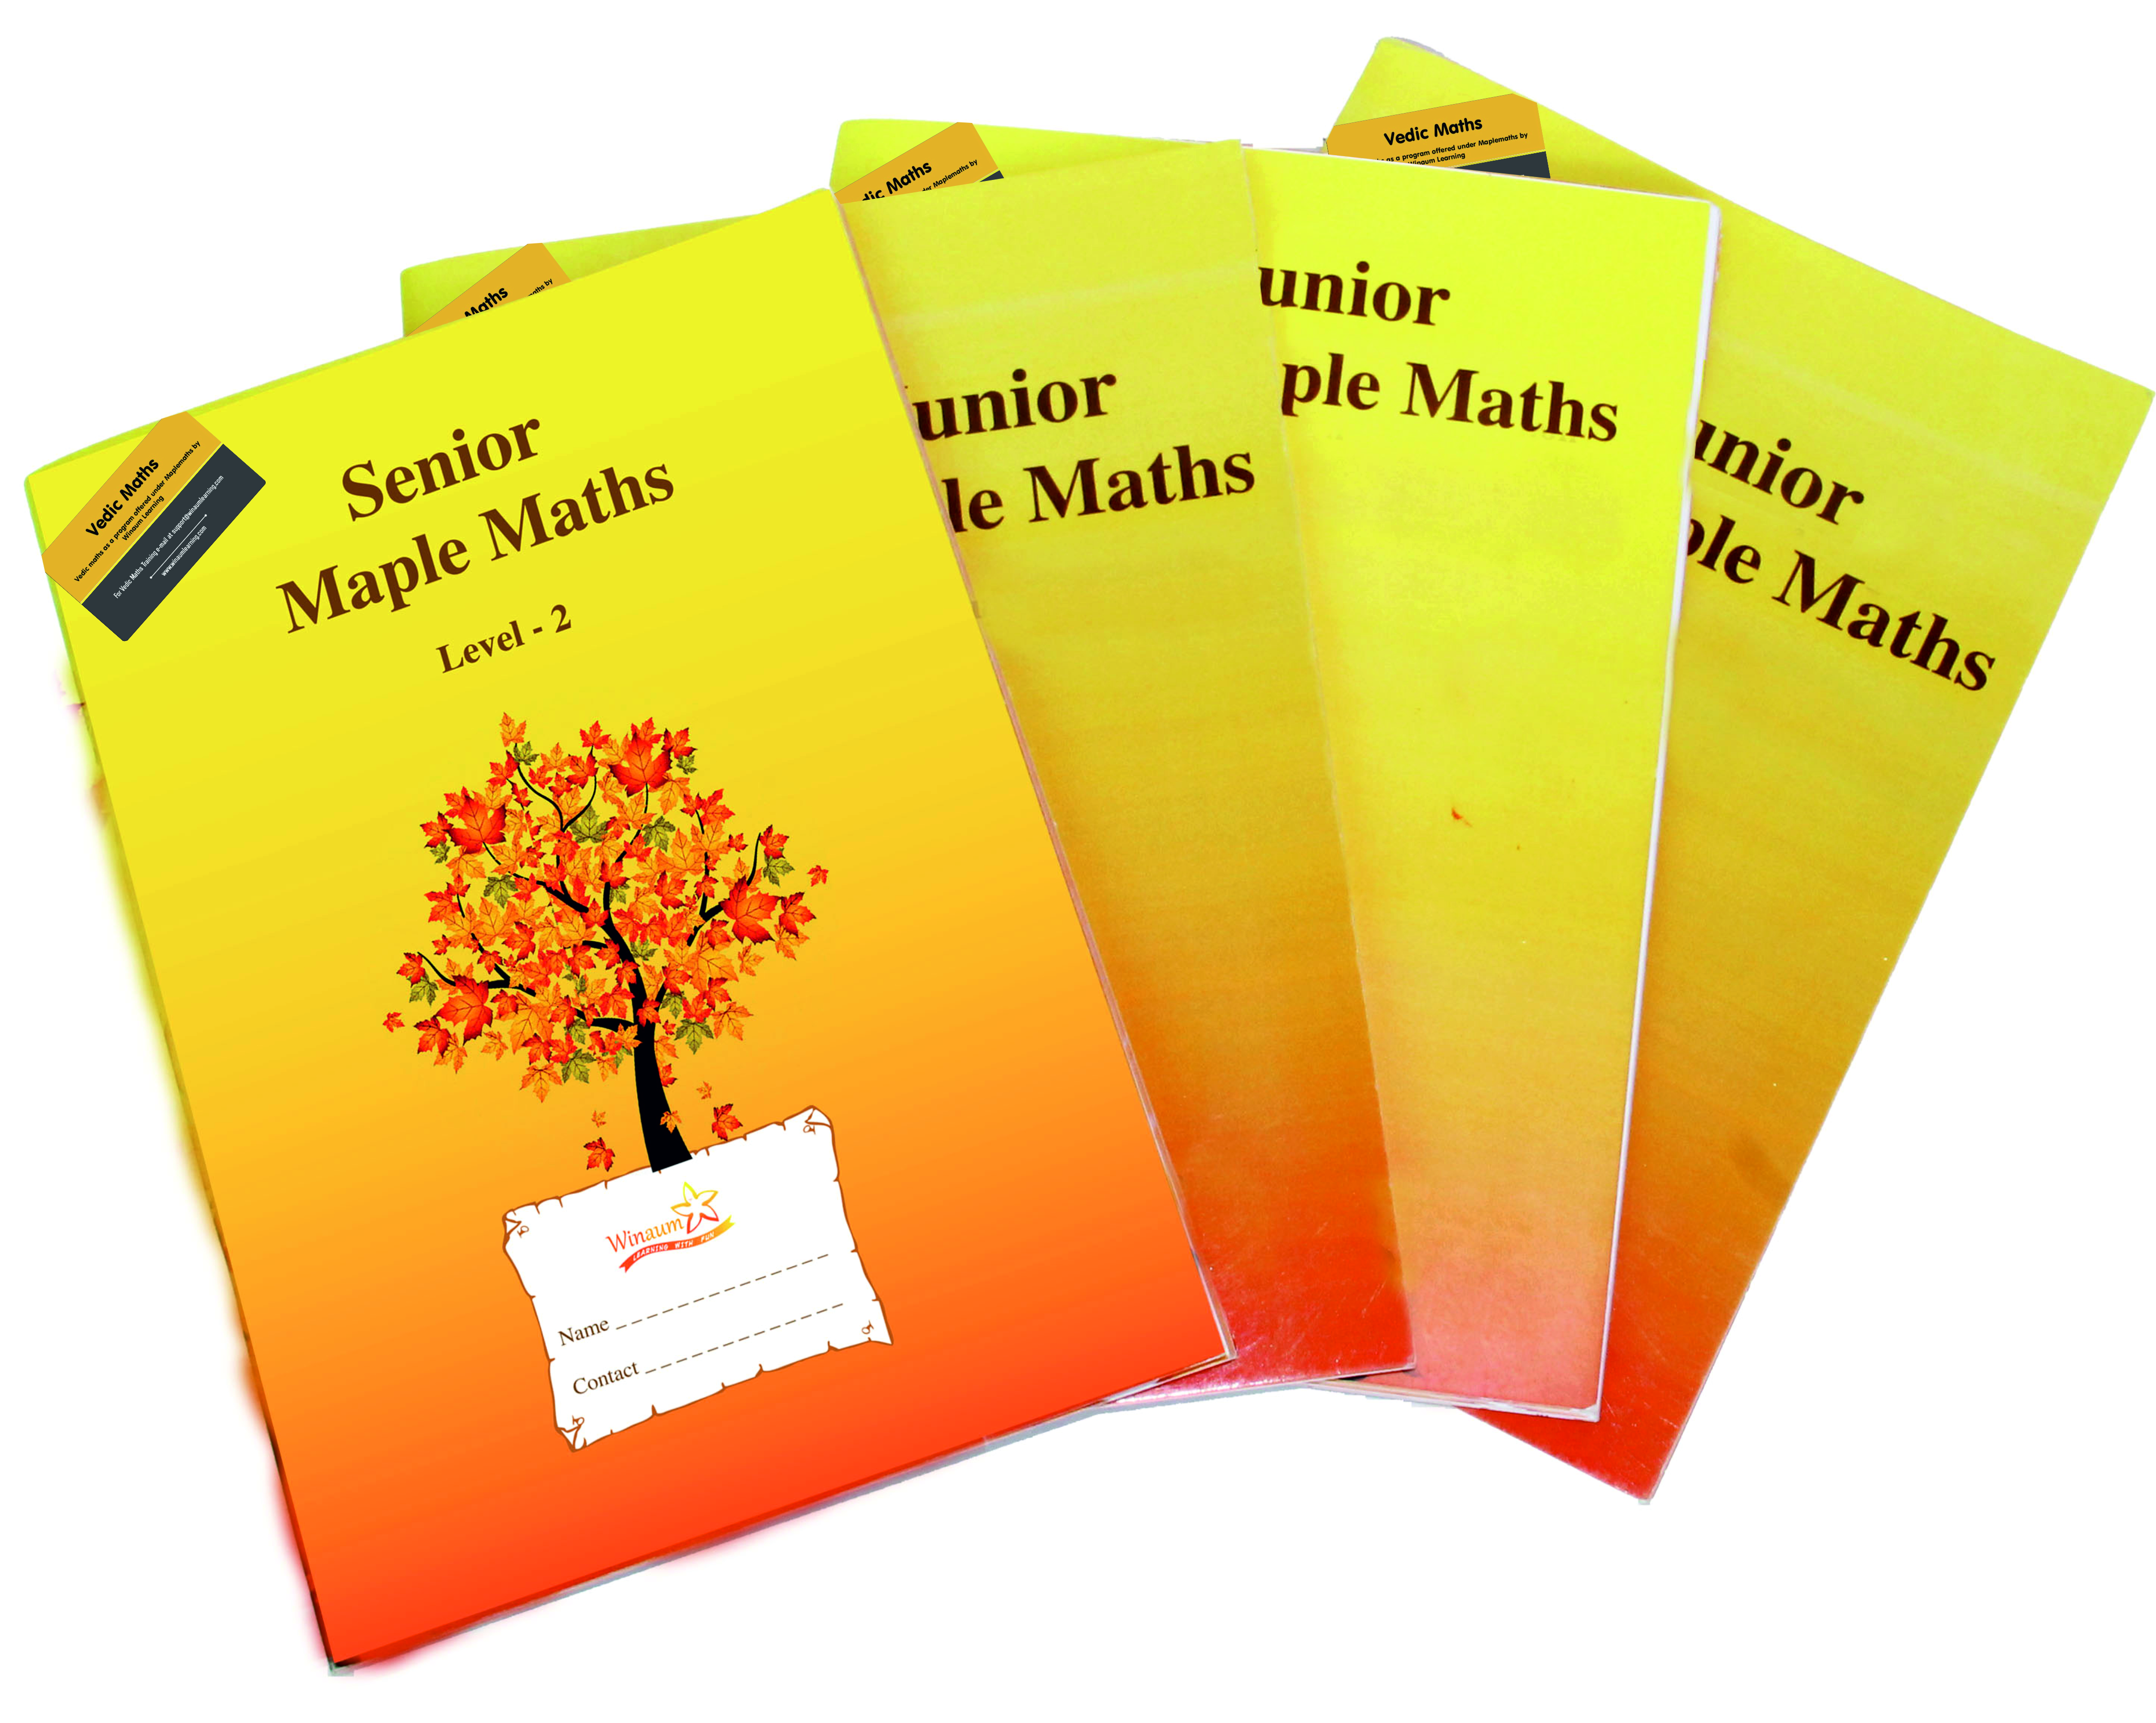 vedic maths book for senior students for grade 5, grade 6, grade 7, grade 8, grade 9